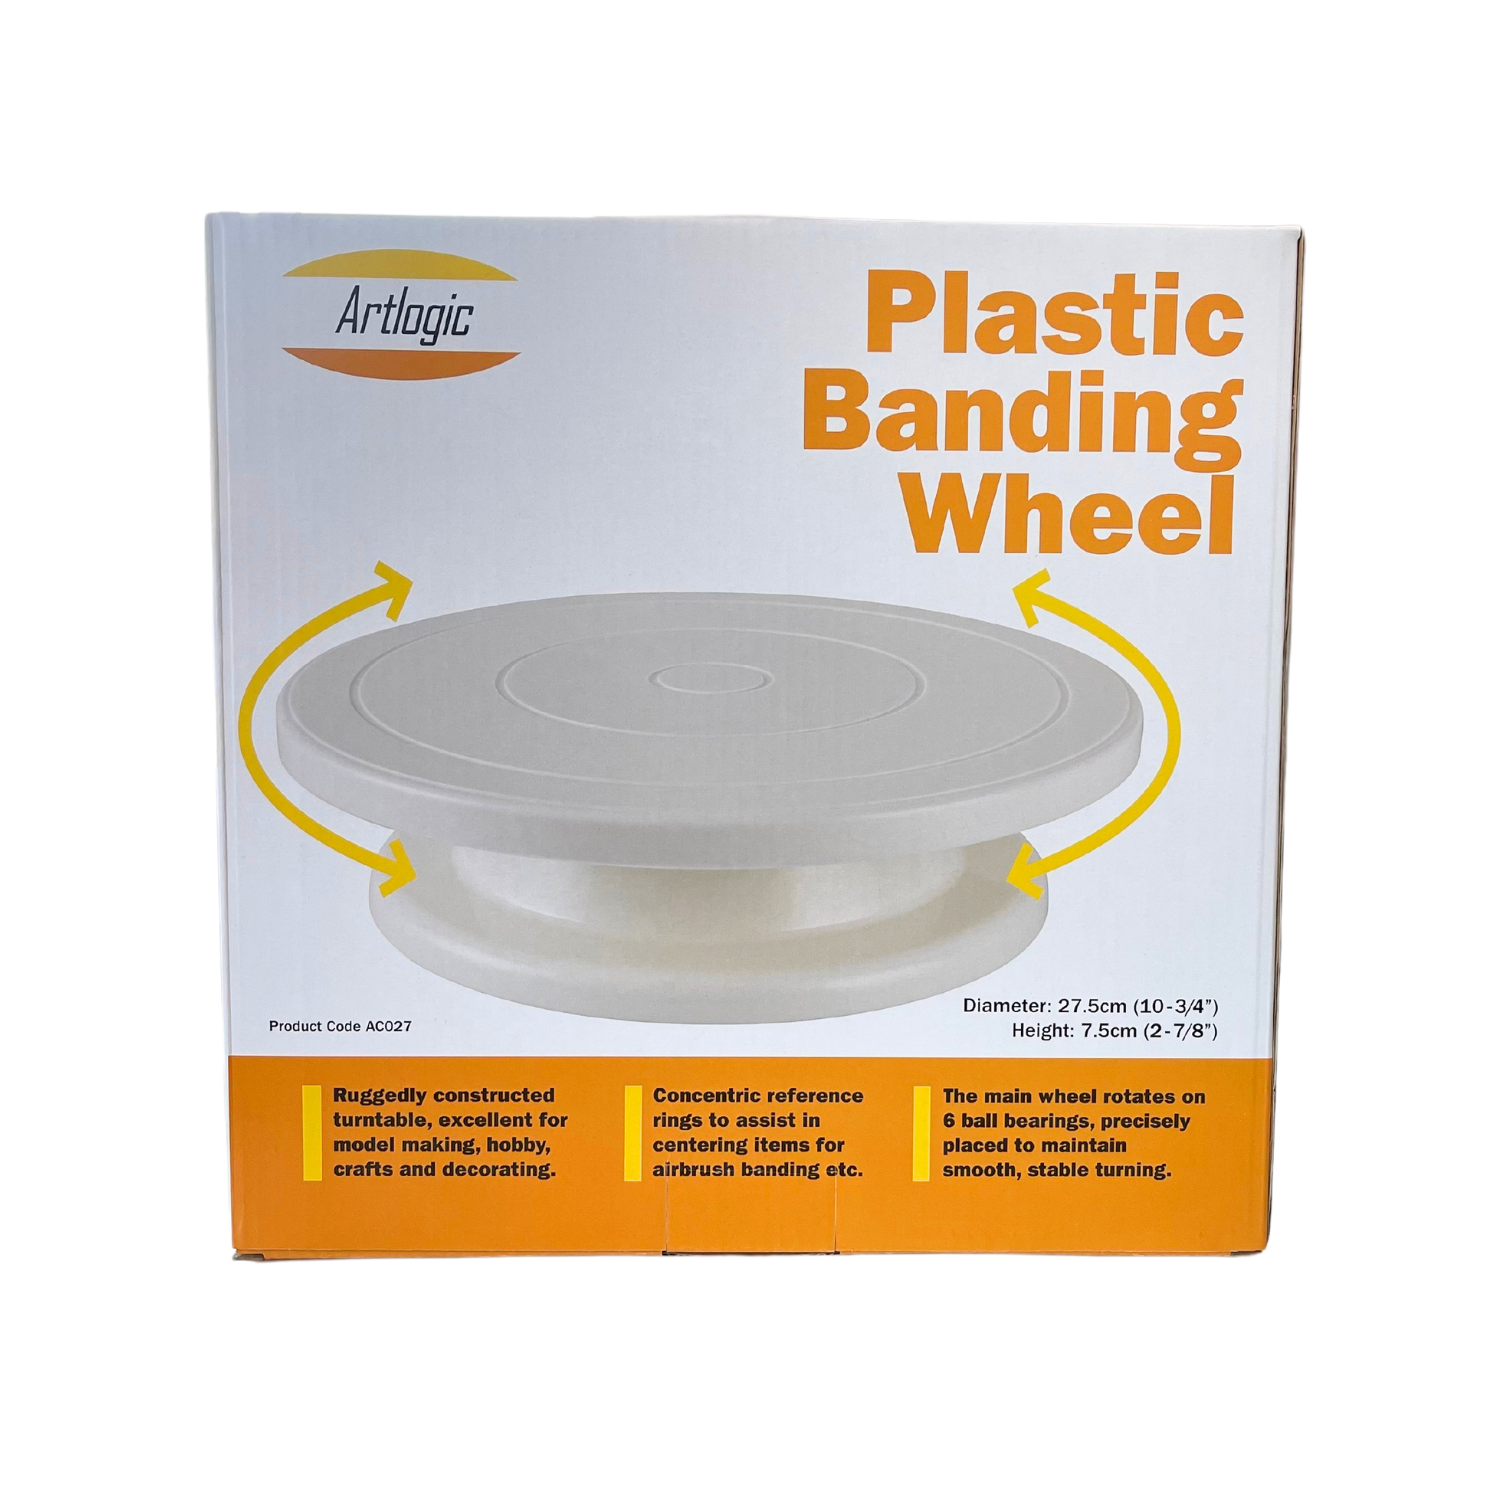 Plastic Banding Wheel